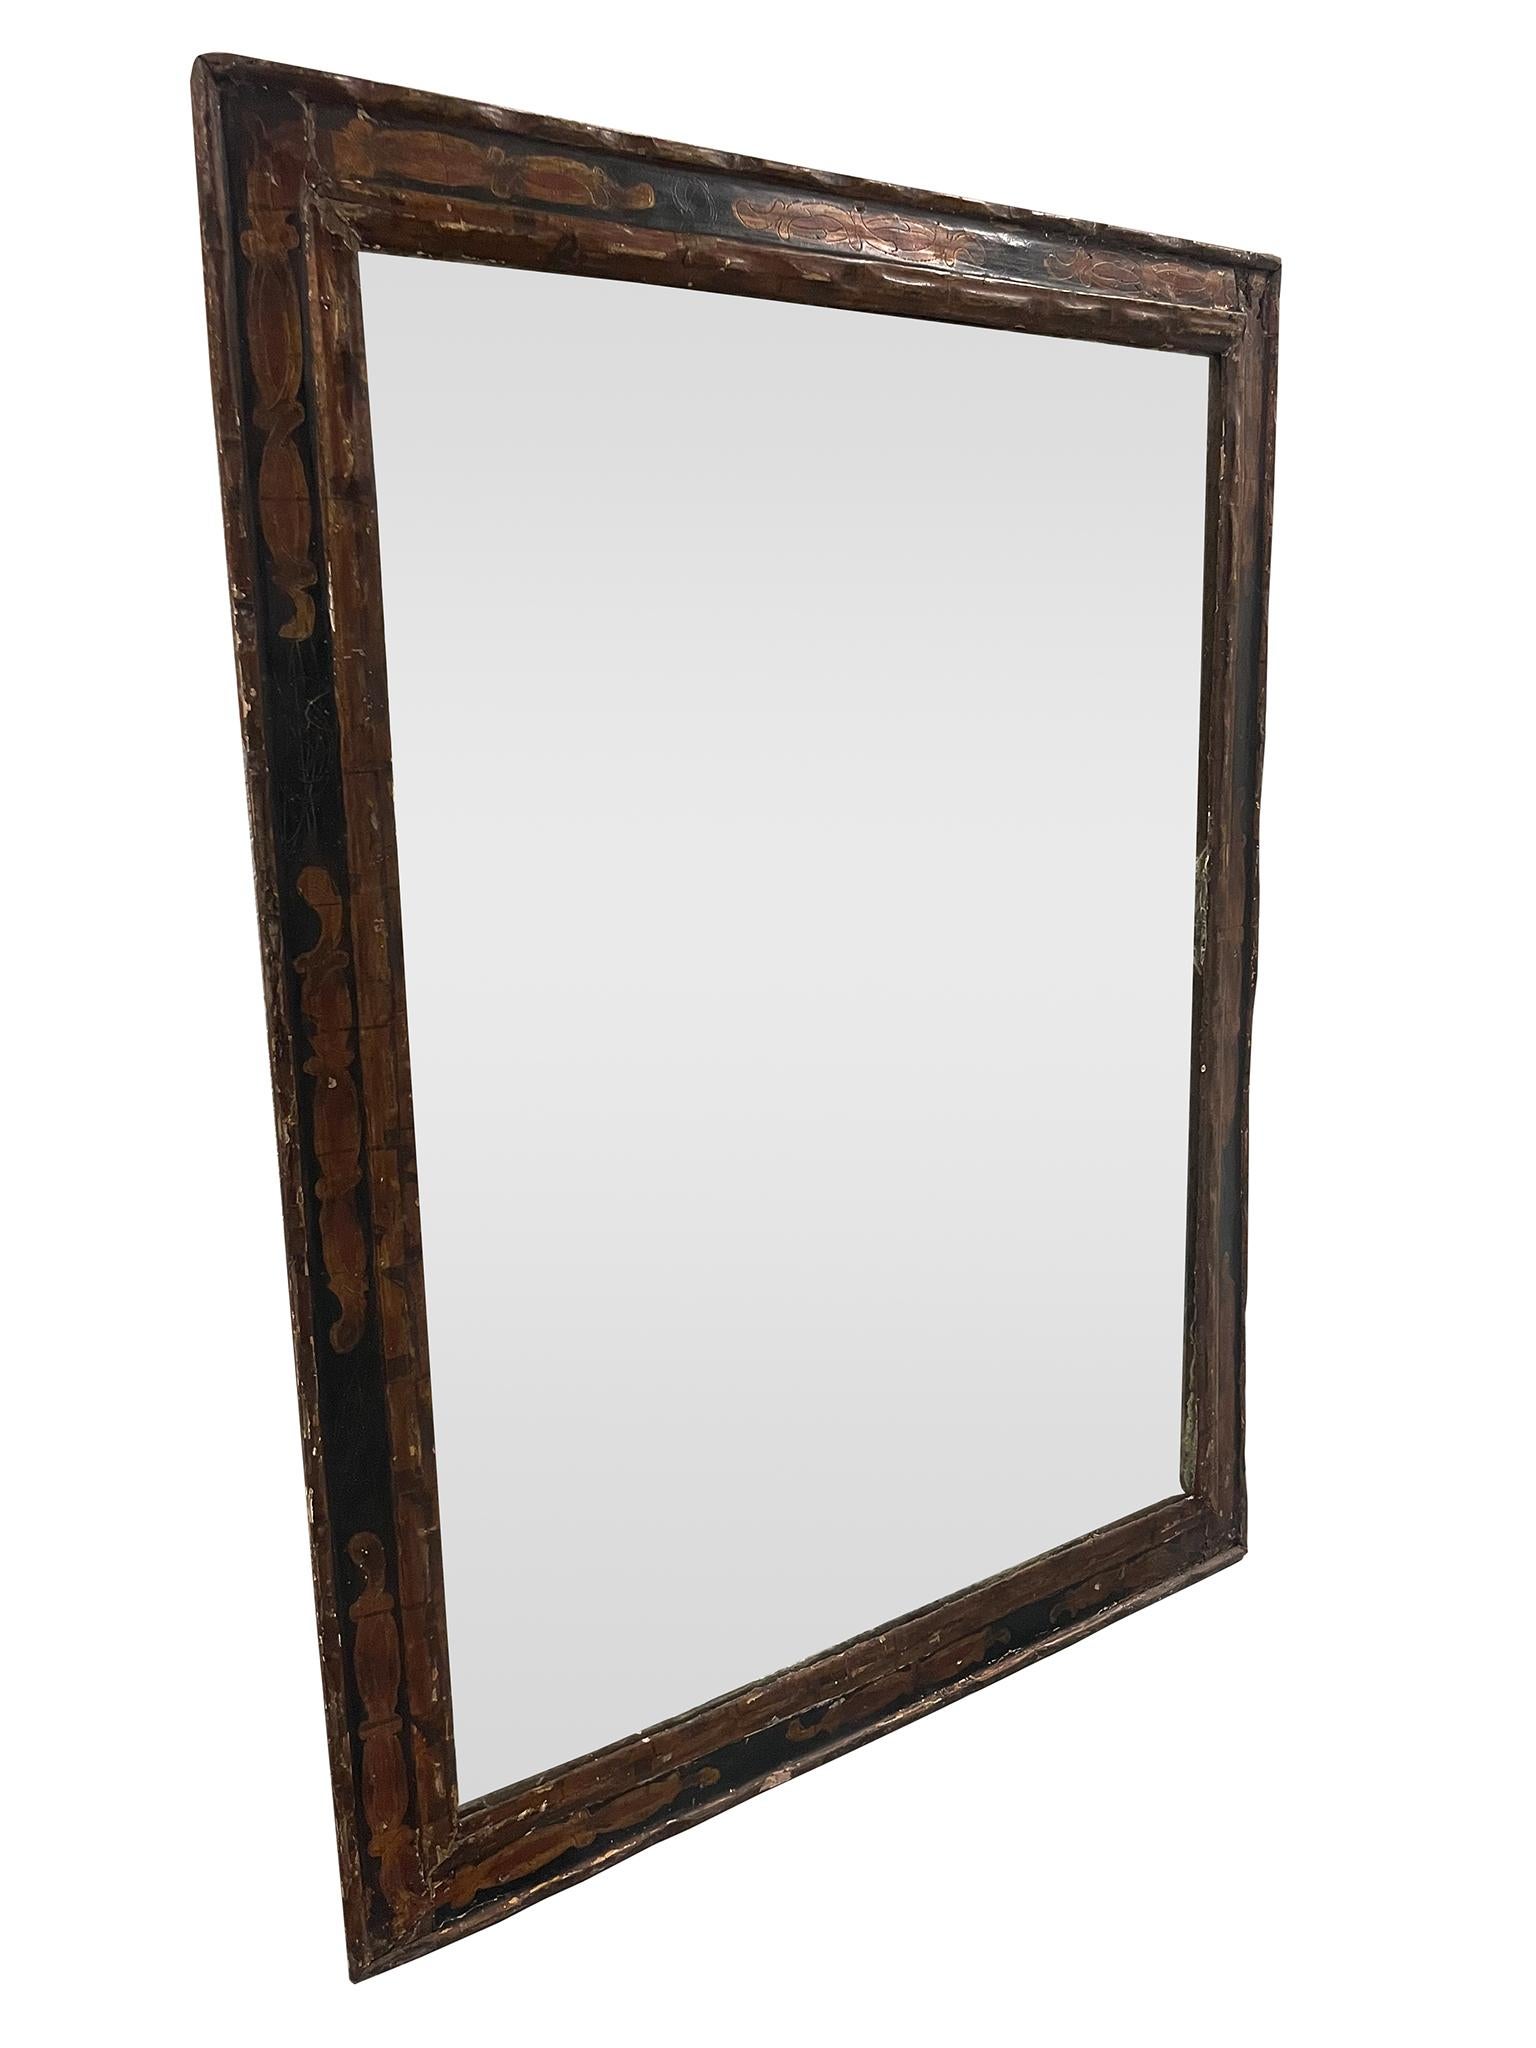 Rustic Antique European Continental Mirror For Sale